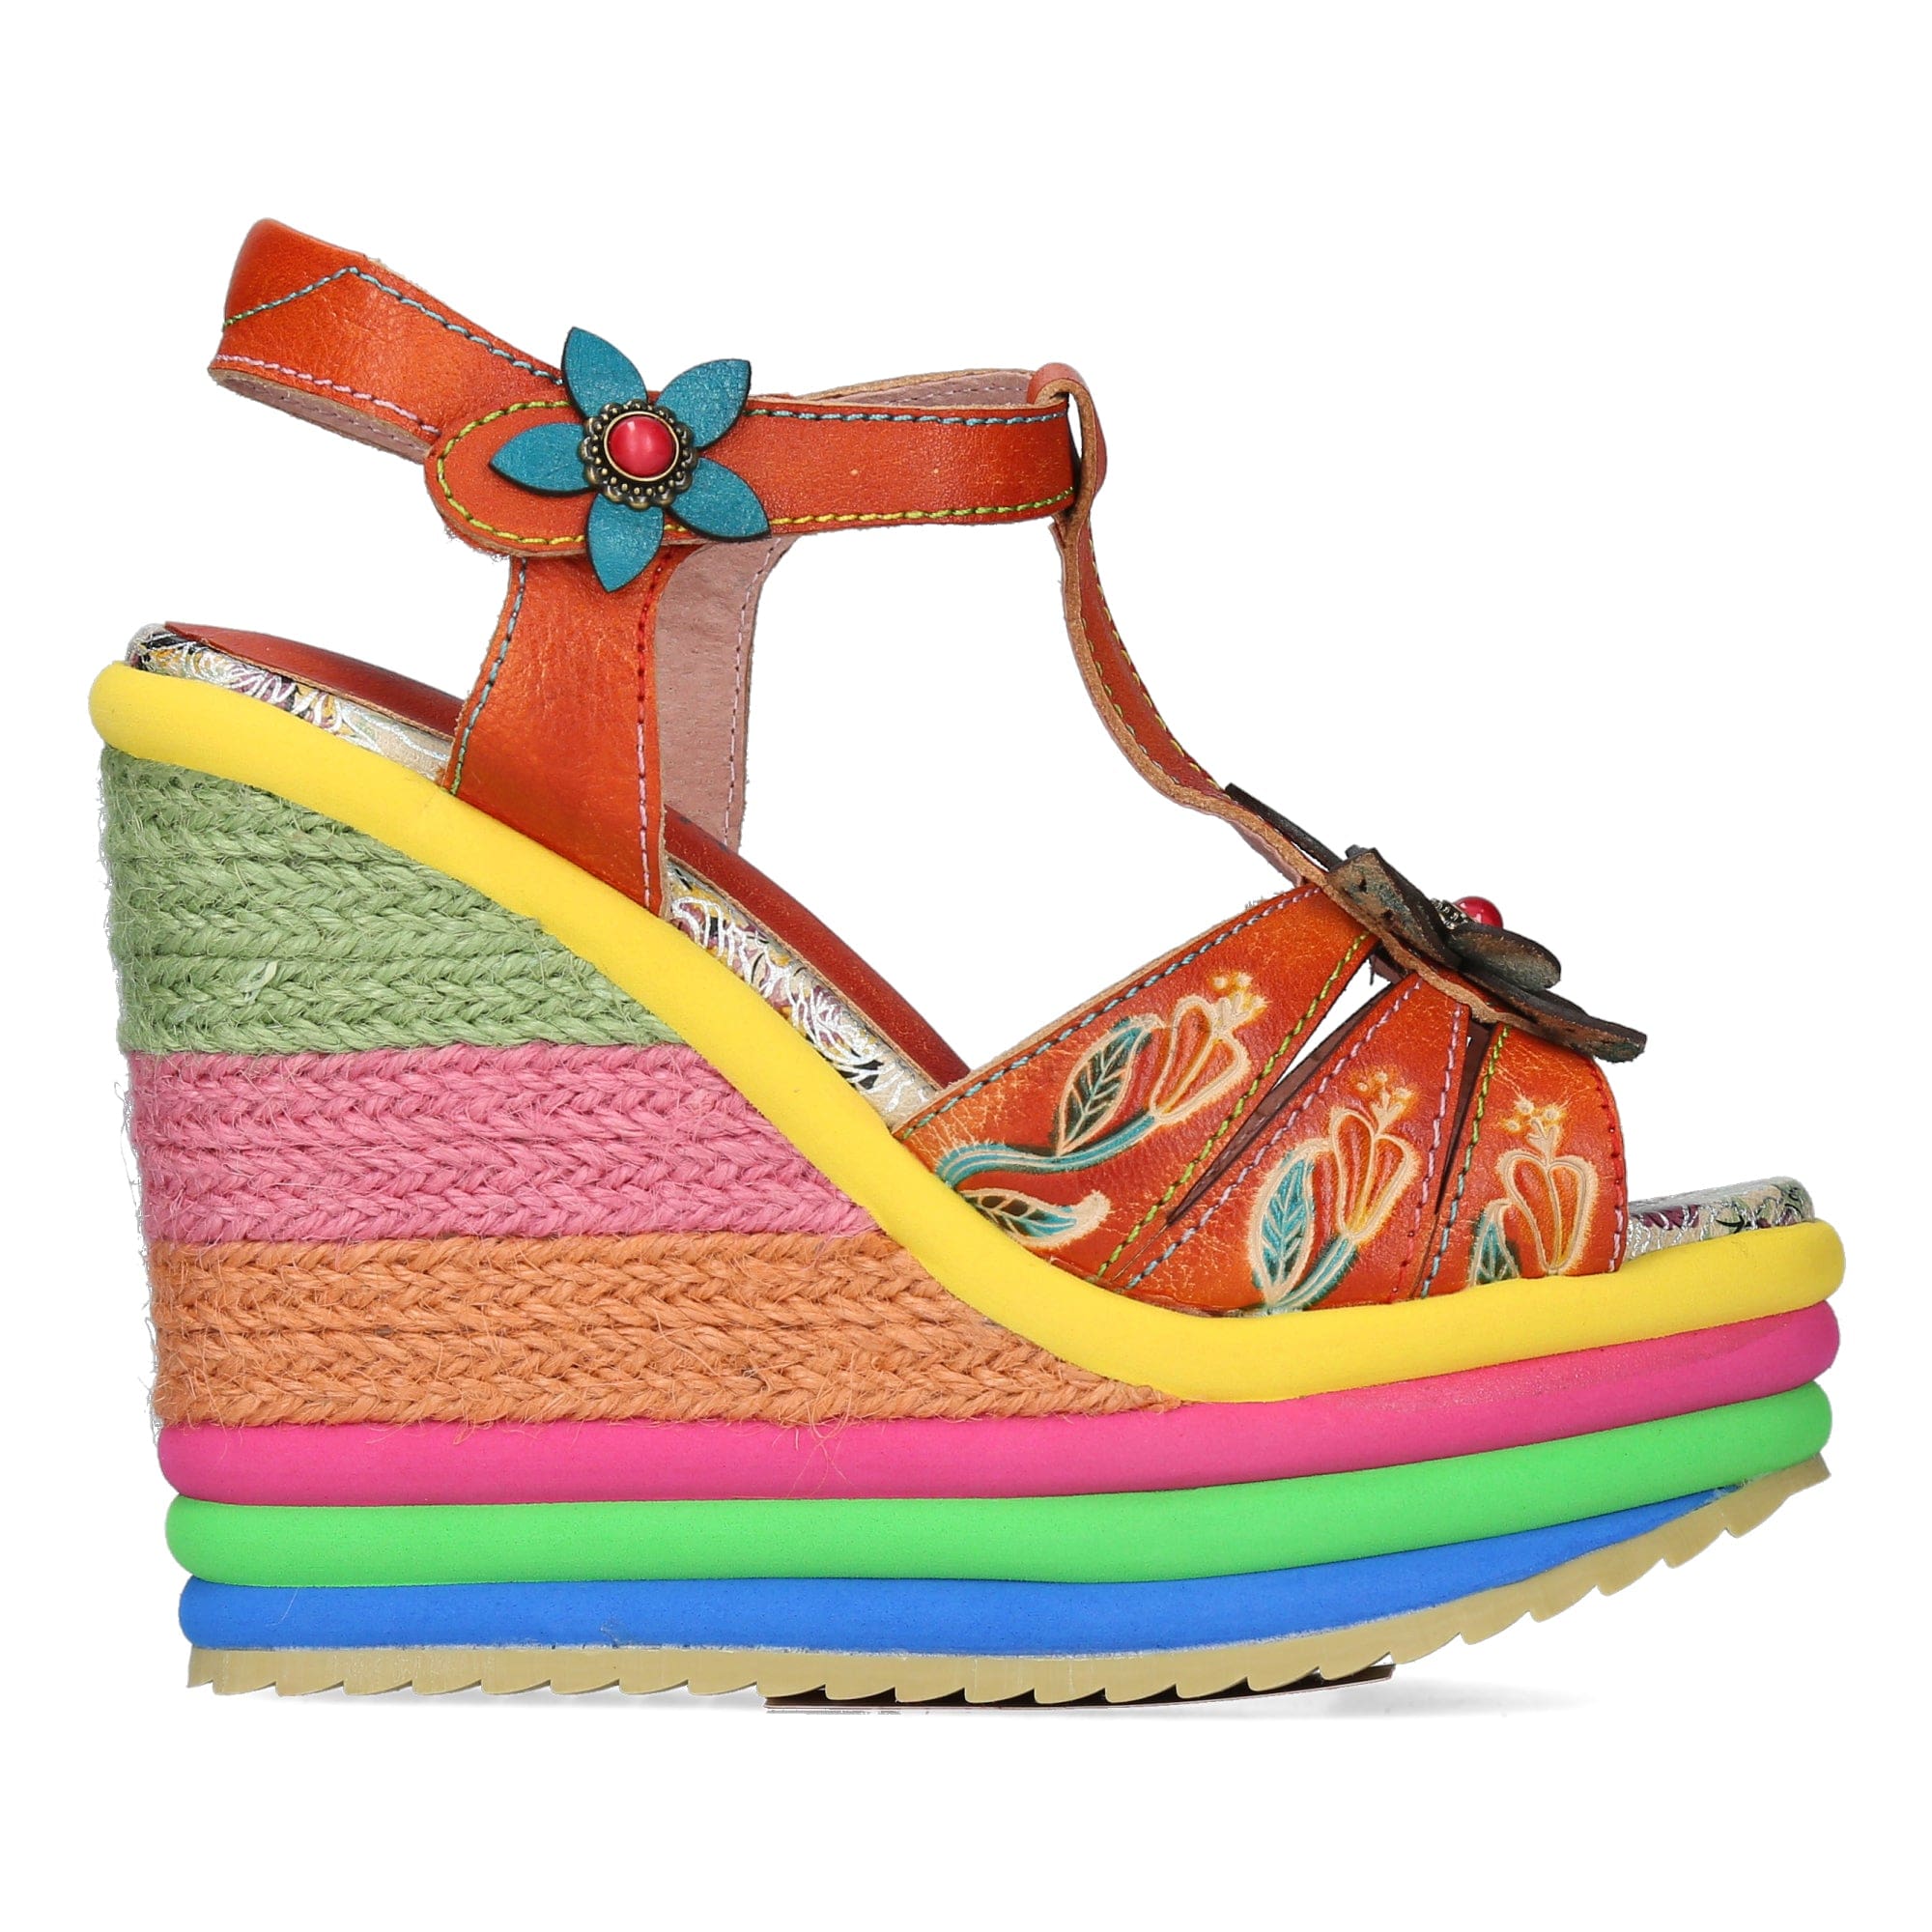 LOUISEO Shoes 31 - 35 / Orange - Sandal